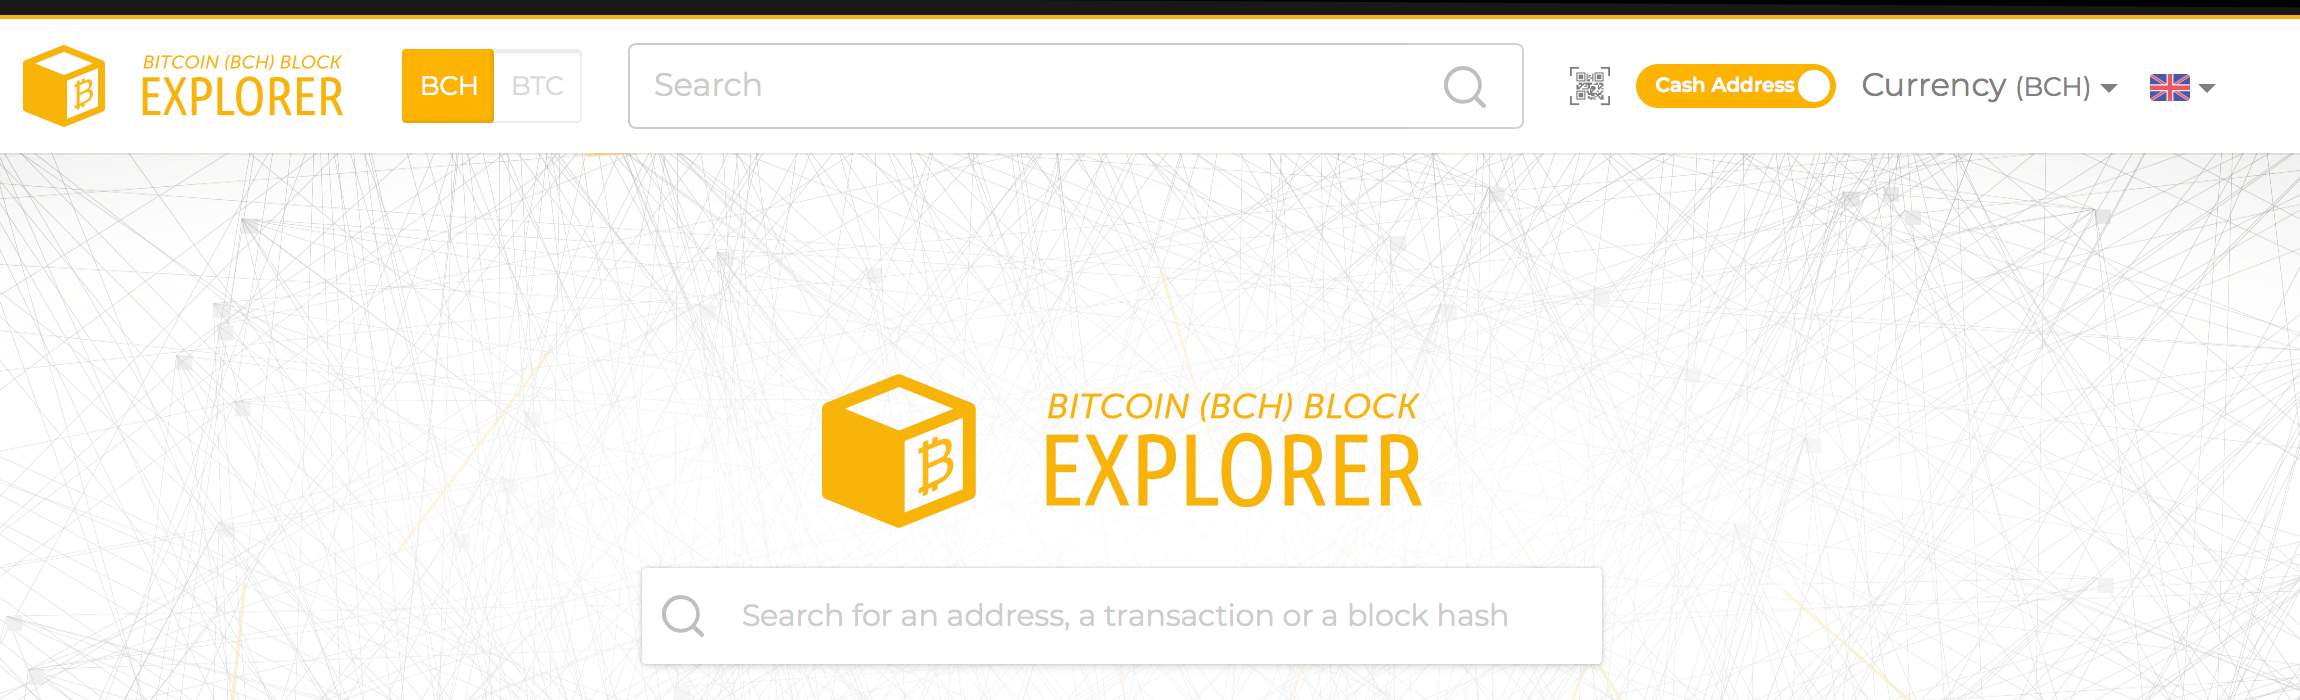 The Bitcoin BCH Block Explorer Explodes With Blockchain Data